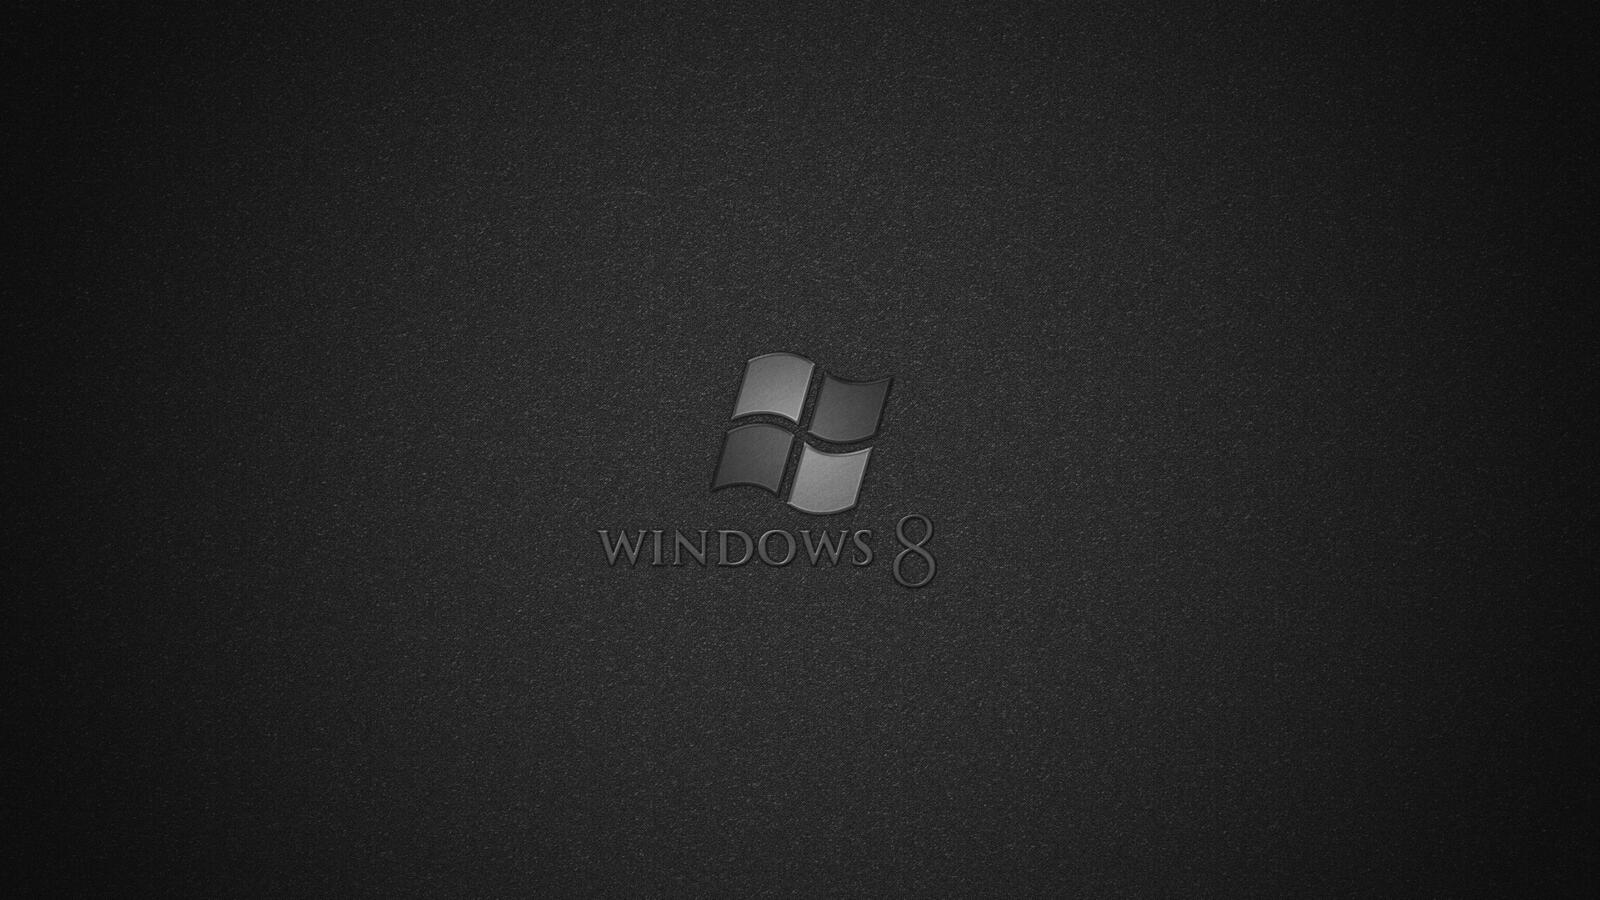 Wallpapers greys pc windows 8 on the desktop